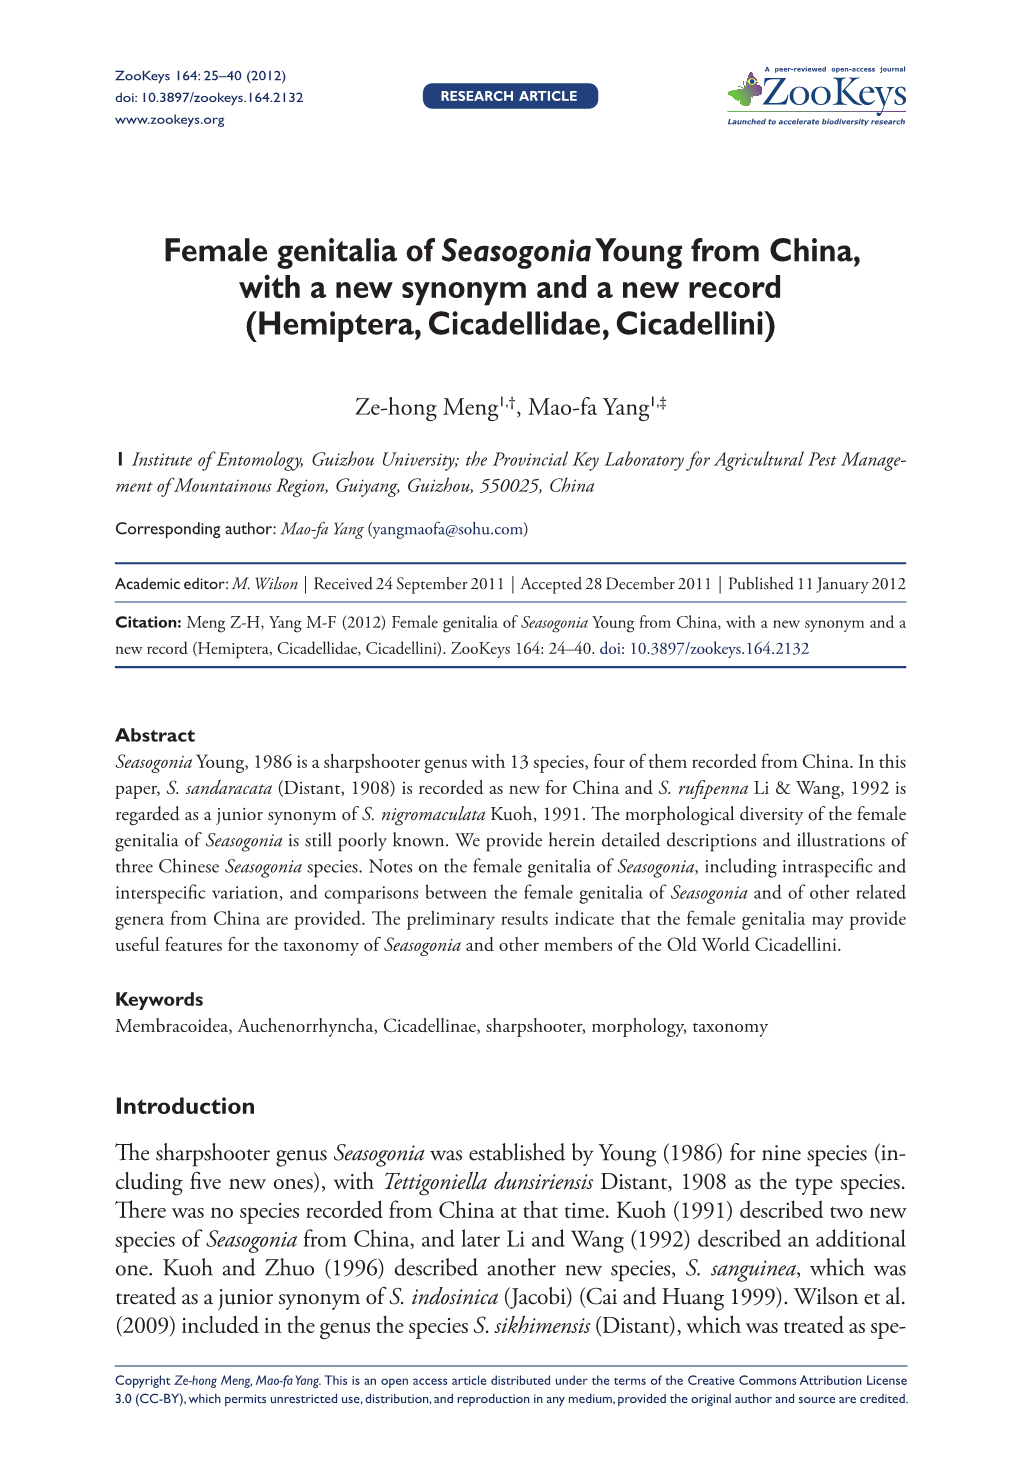 Female Genitalia of Seasogoniayoung from China